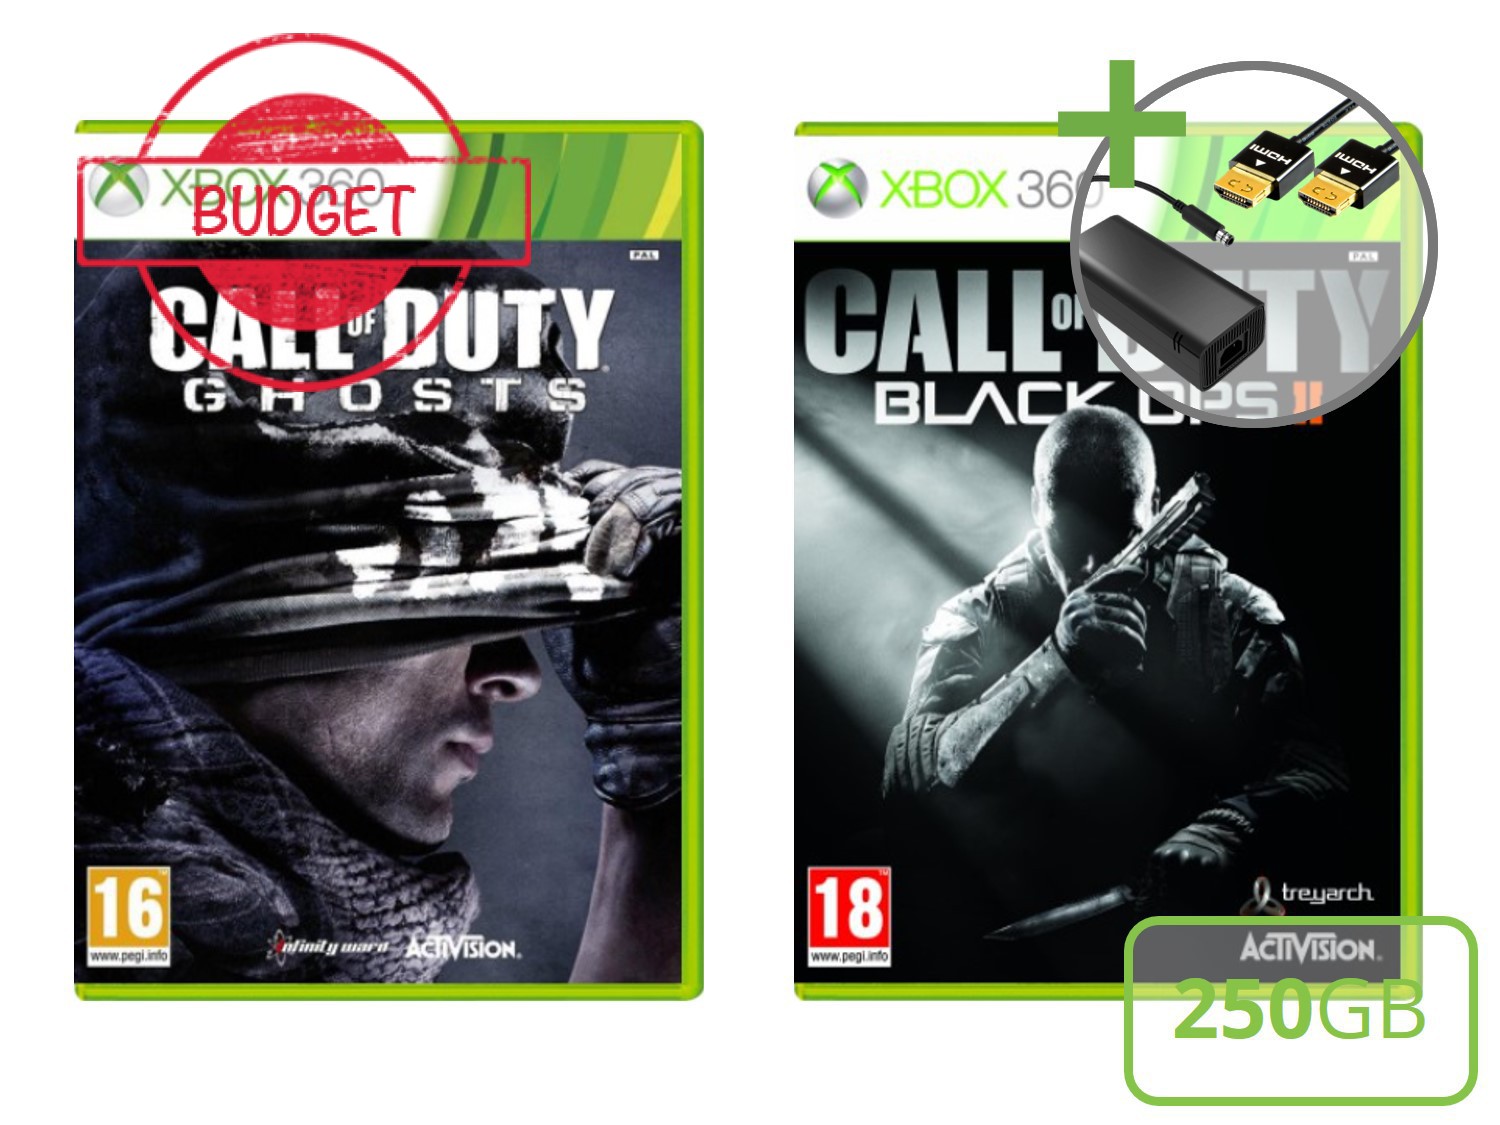 Microsoft Xbox 360 New Slim Starter Pack - 250GB Call of Duty Edition - Budget - Xbox 360 Hardware - 5